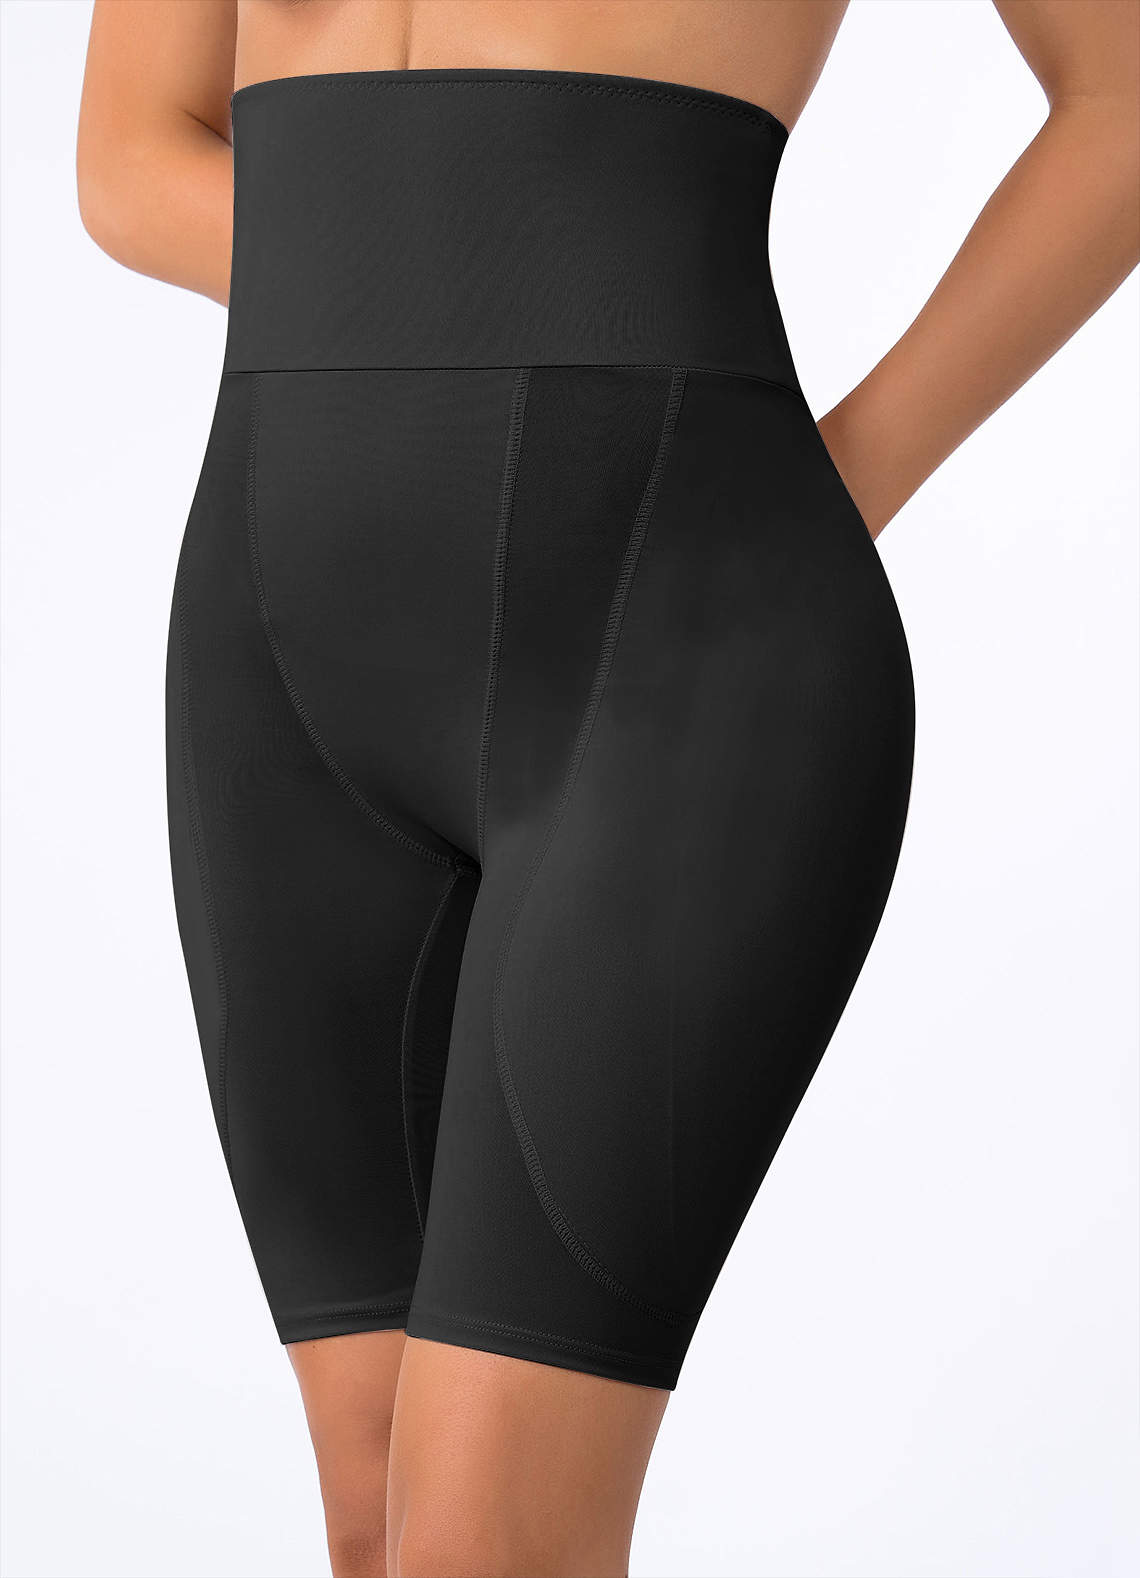 Buy Body Shaping High Waist Hip Enhancer Panty Shapewear - Black, Fashion